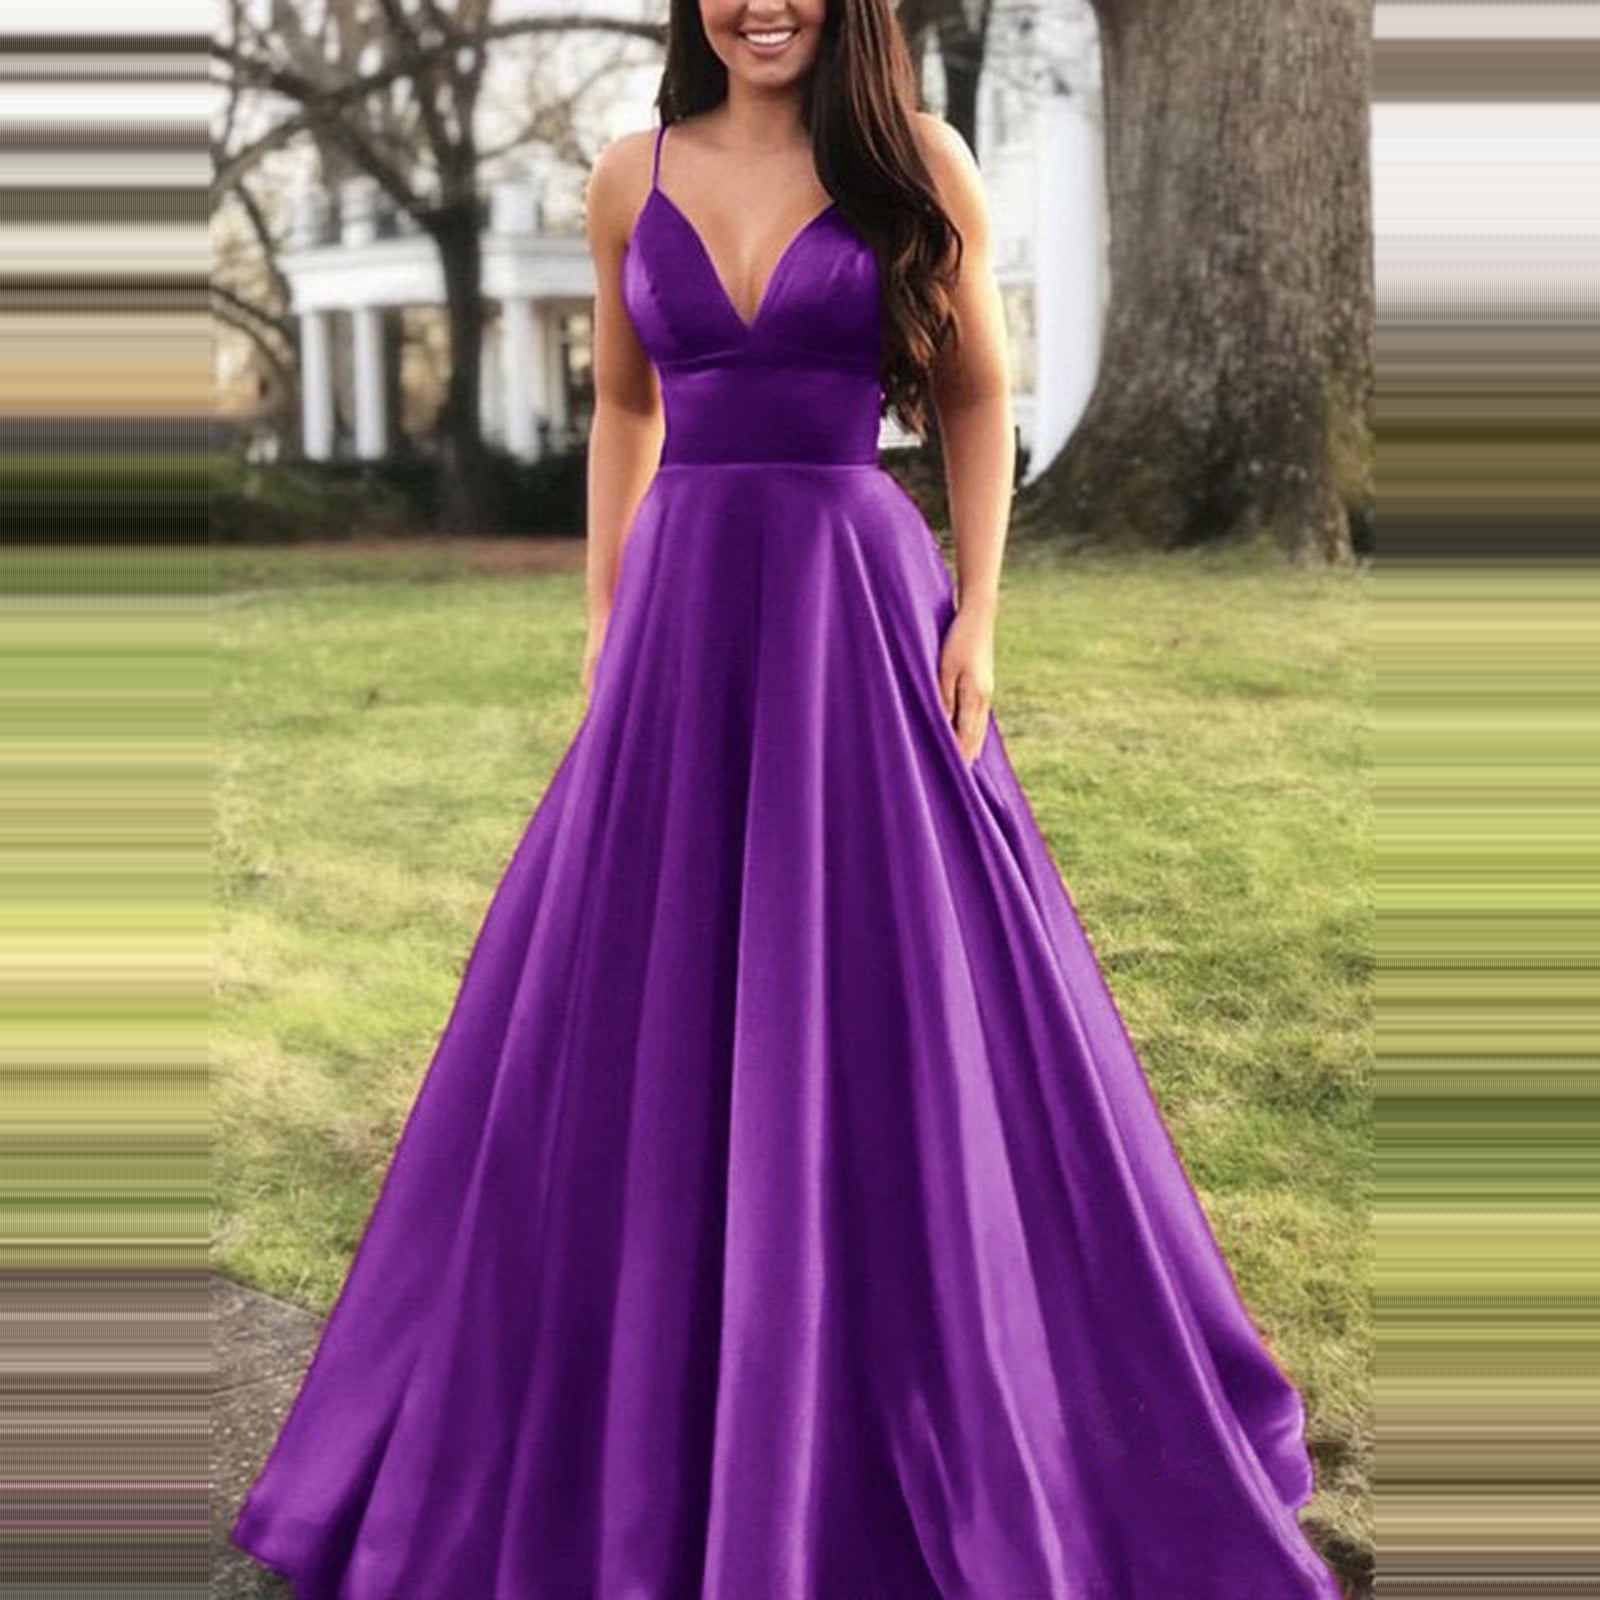 purple birthday dress